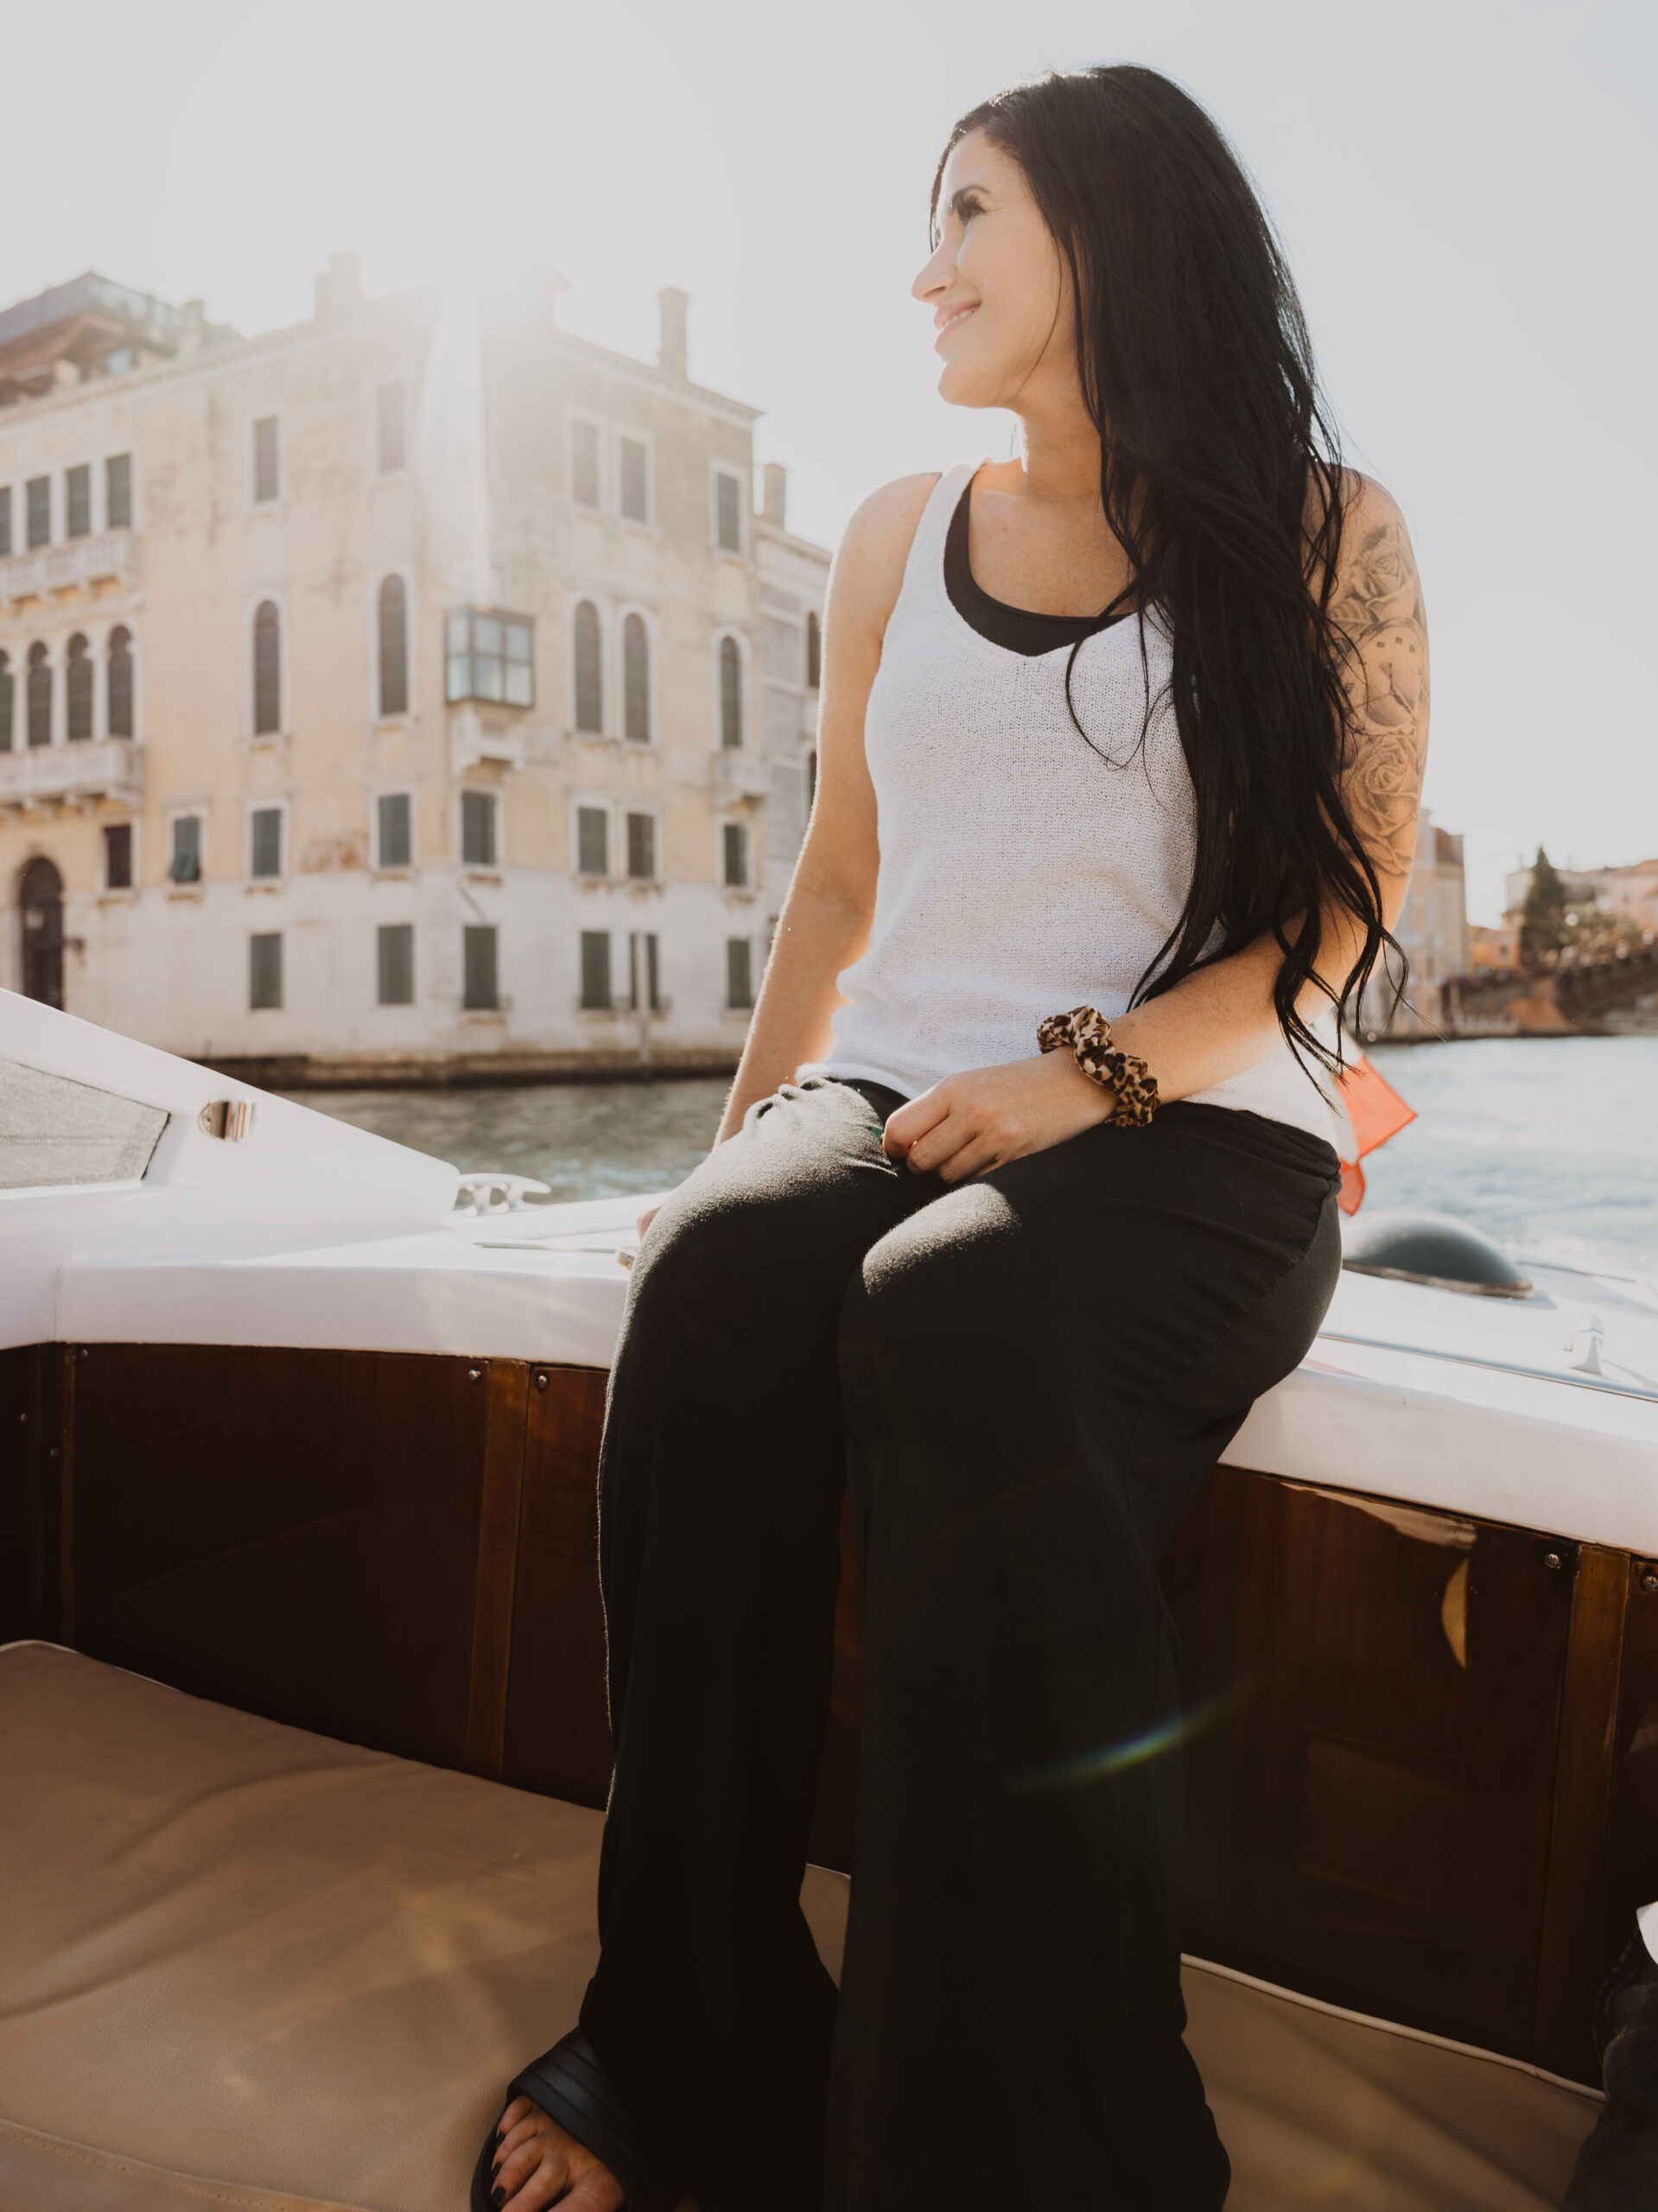 Private boat taxi in Venice, Italy. 